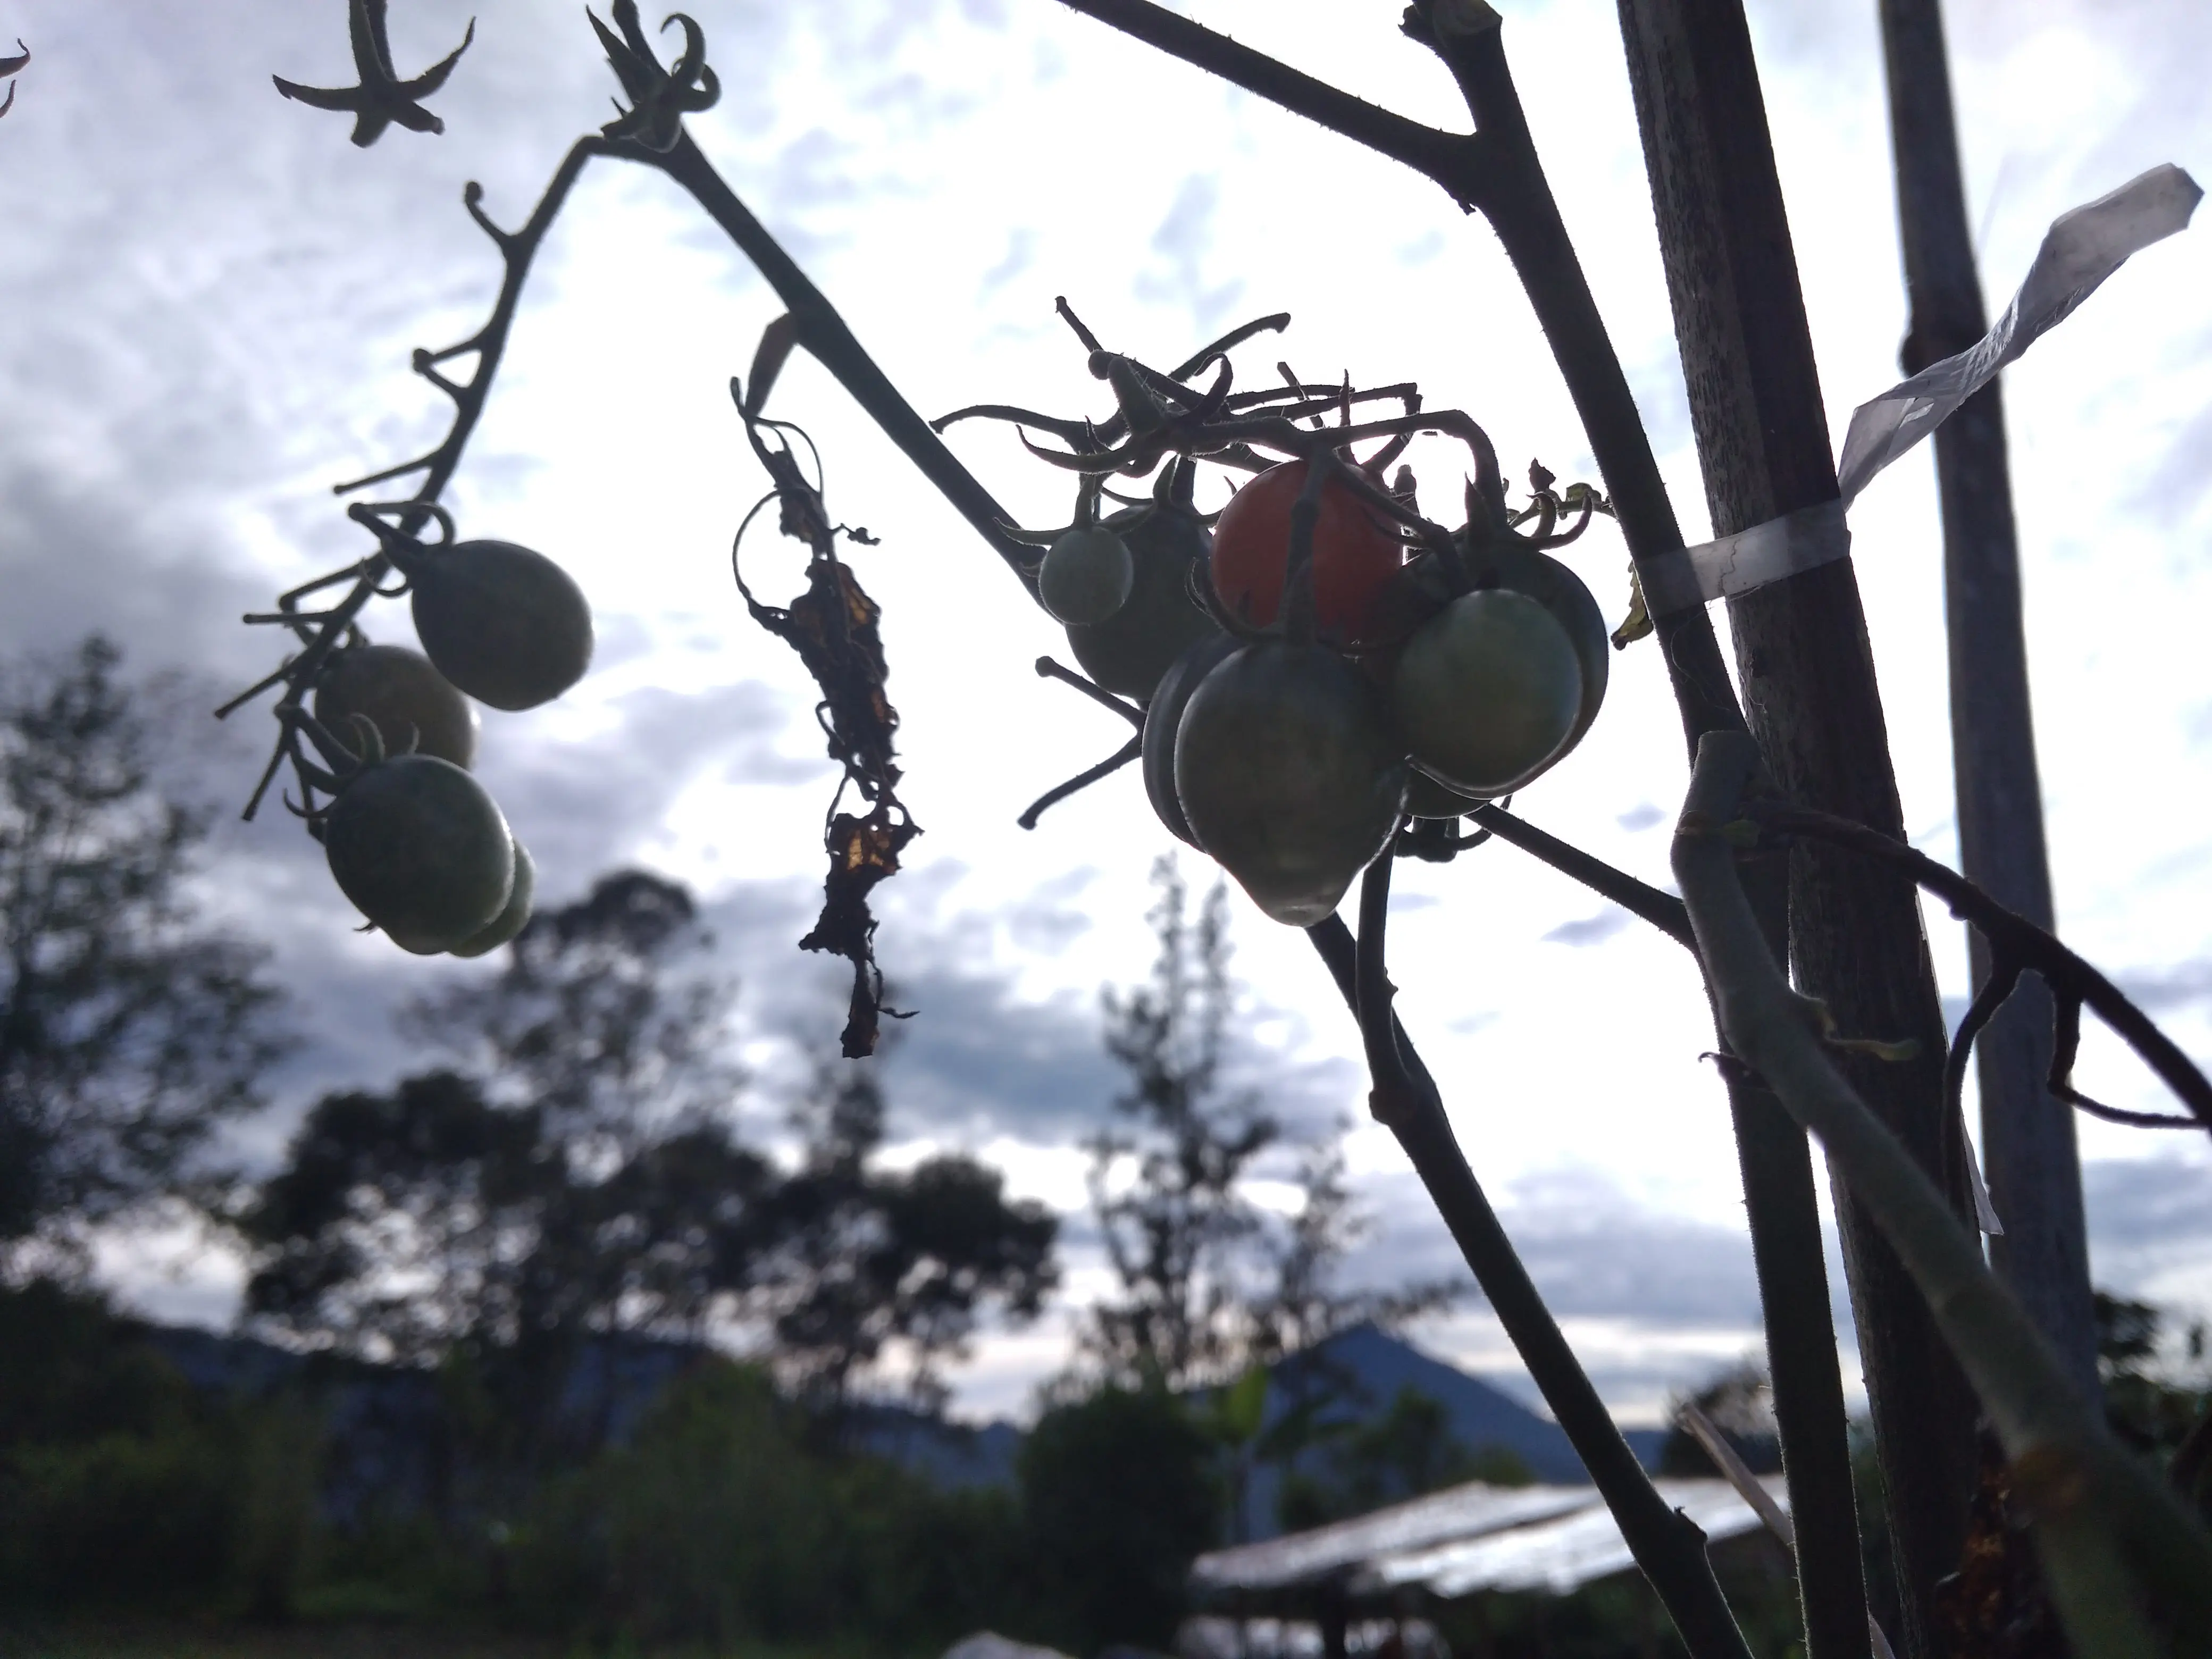 Titik embun di ujung buah tomat, bukti kesegaran udara pagi Cikole. (foto: /edhie prayitno ige)